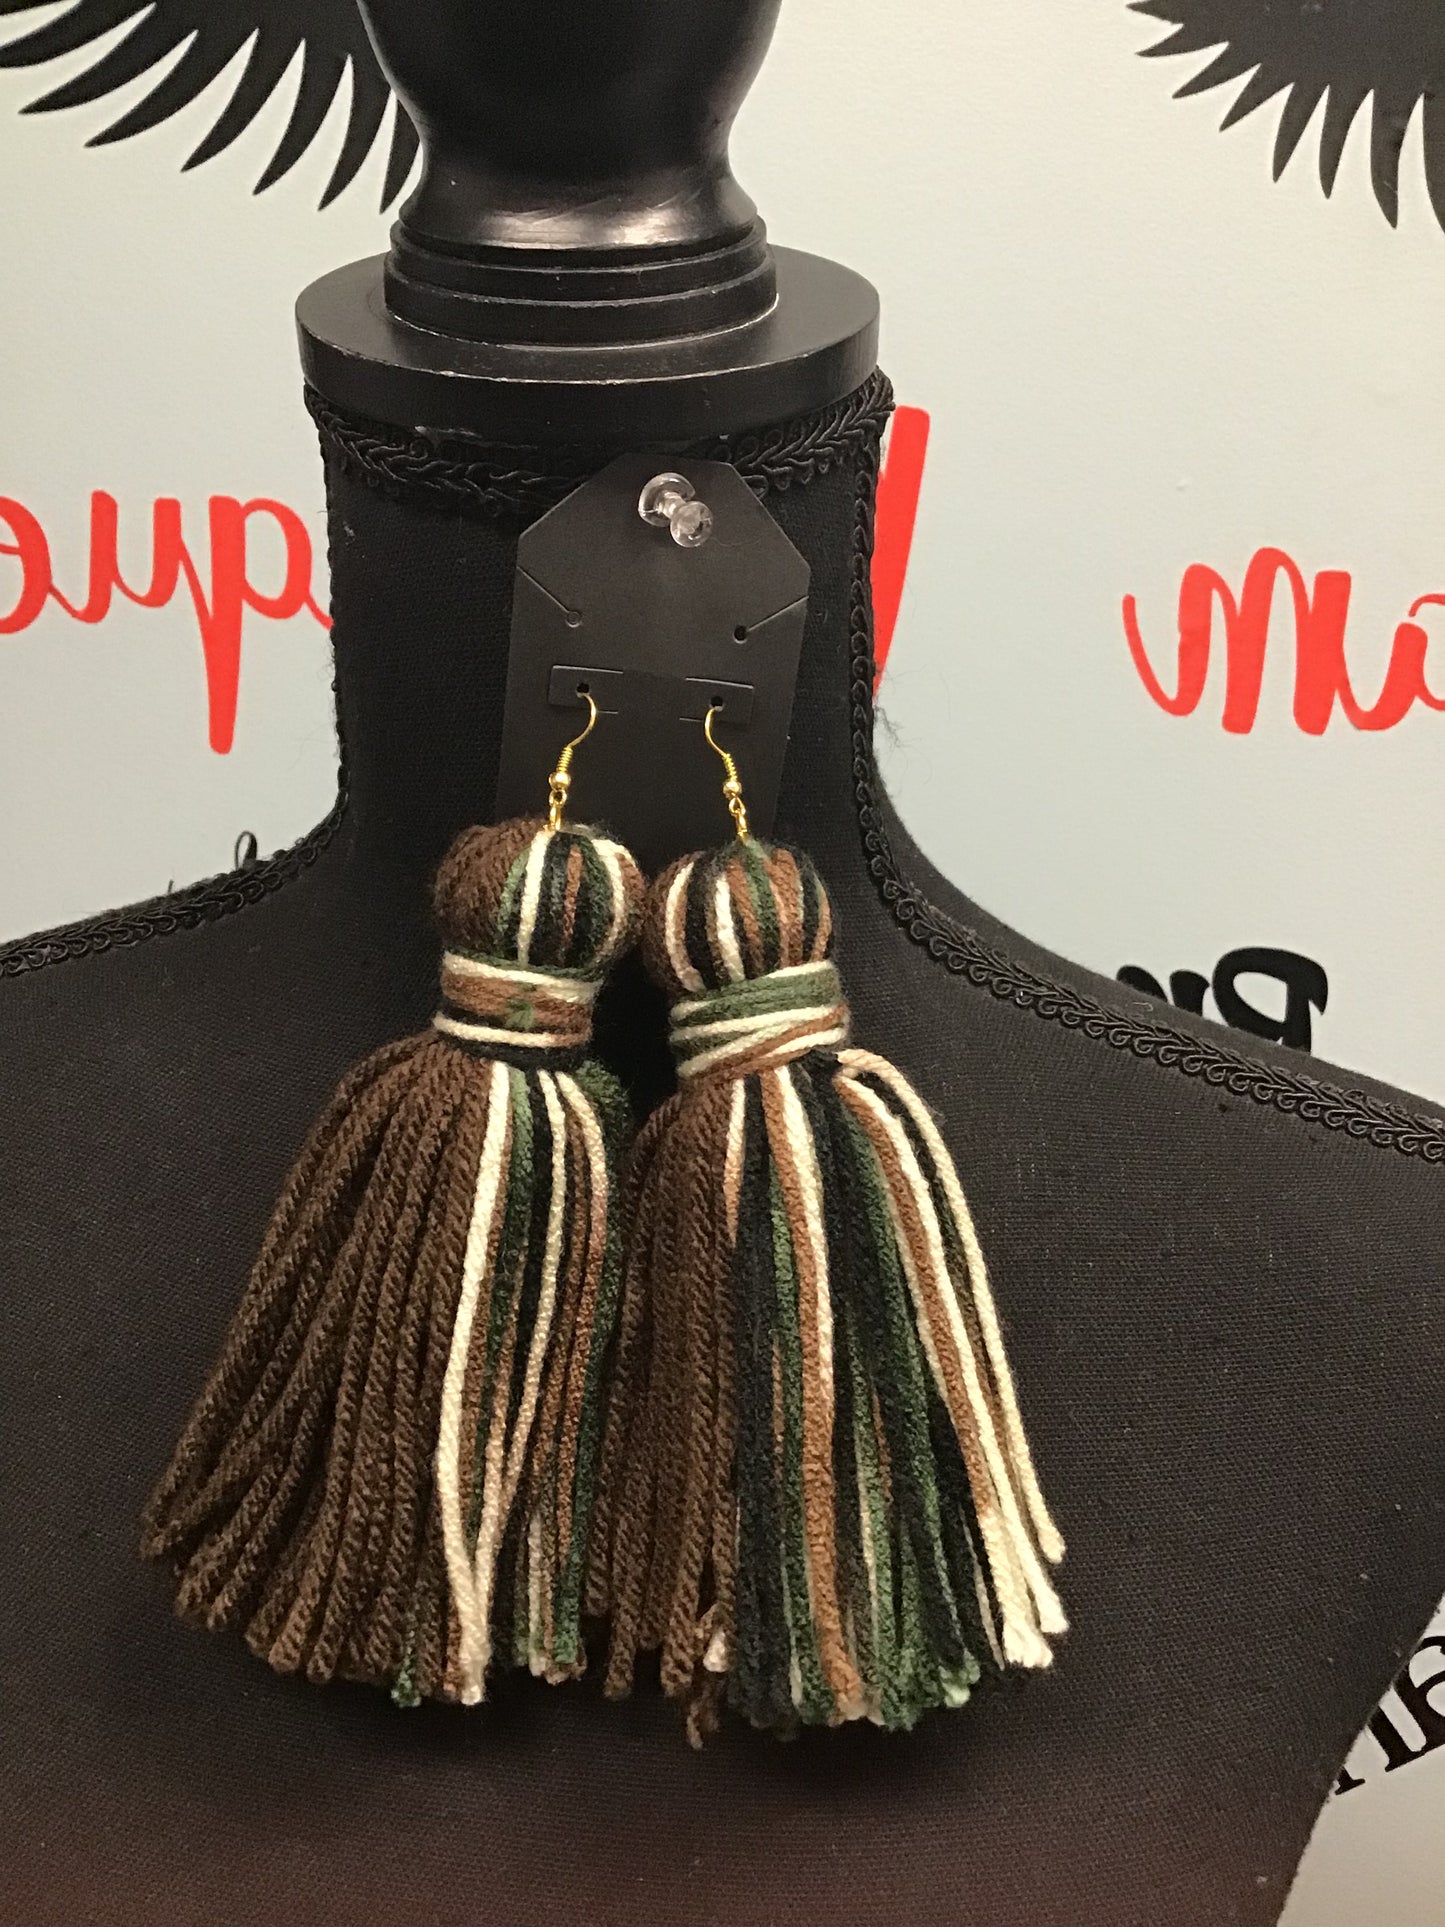 Ball Yarn Tassel Earrings- Click for more styles